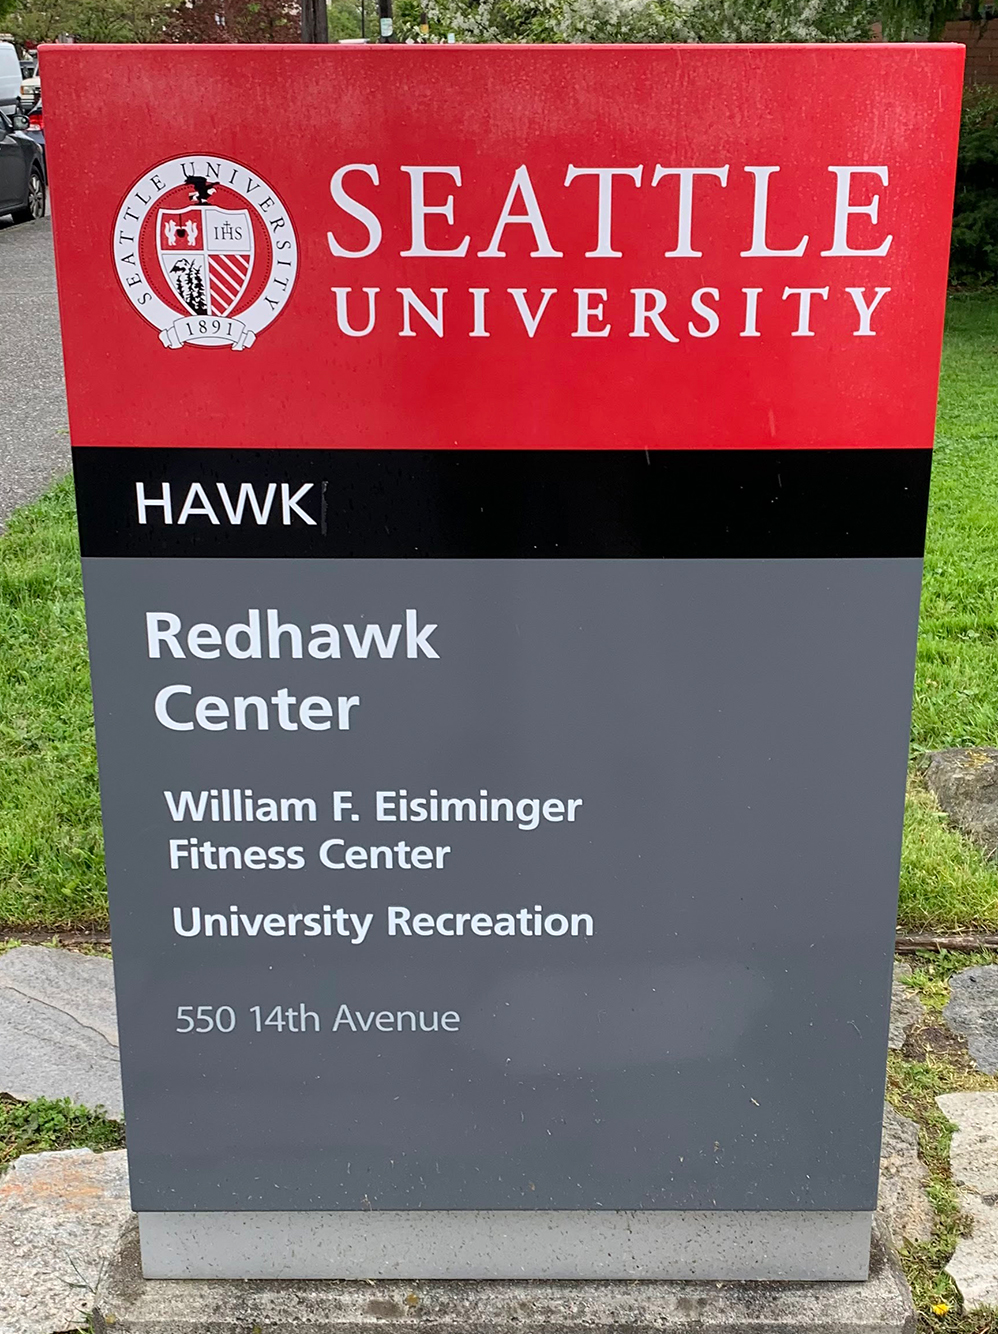 Seattle at Seattle University